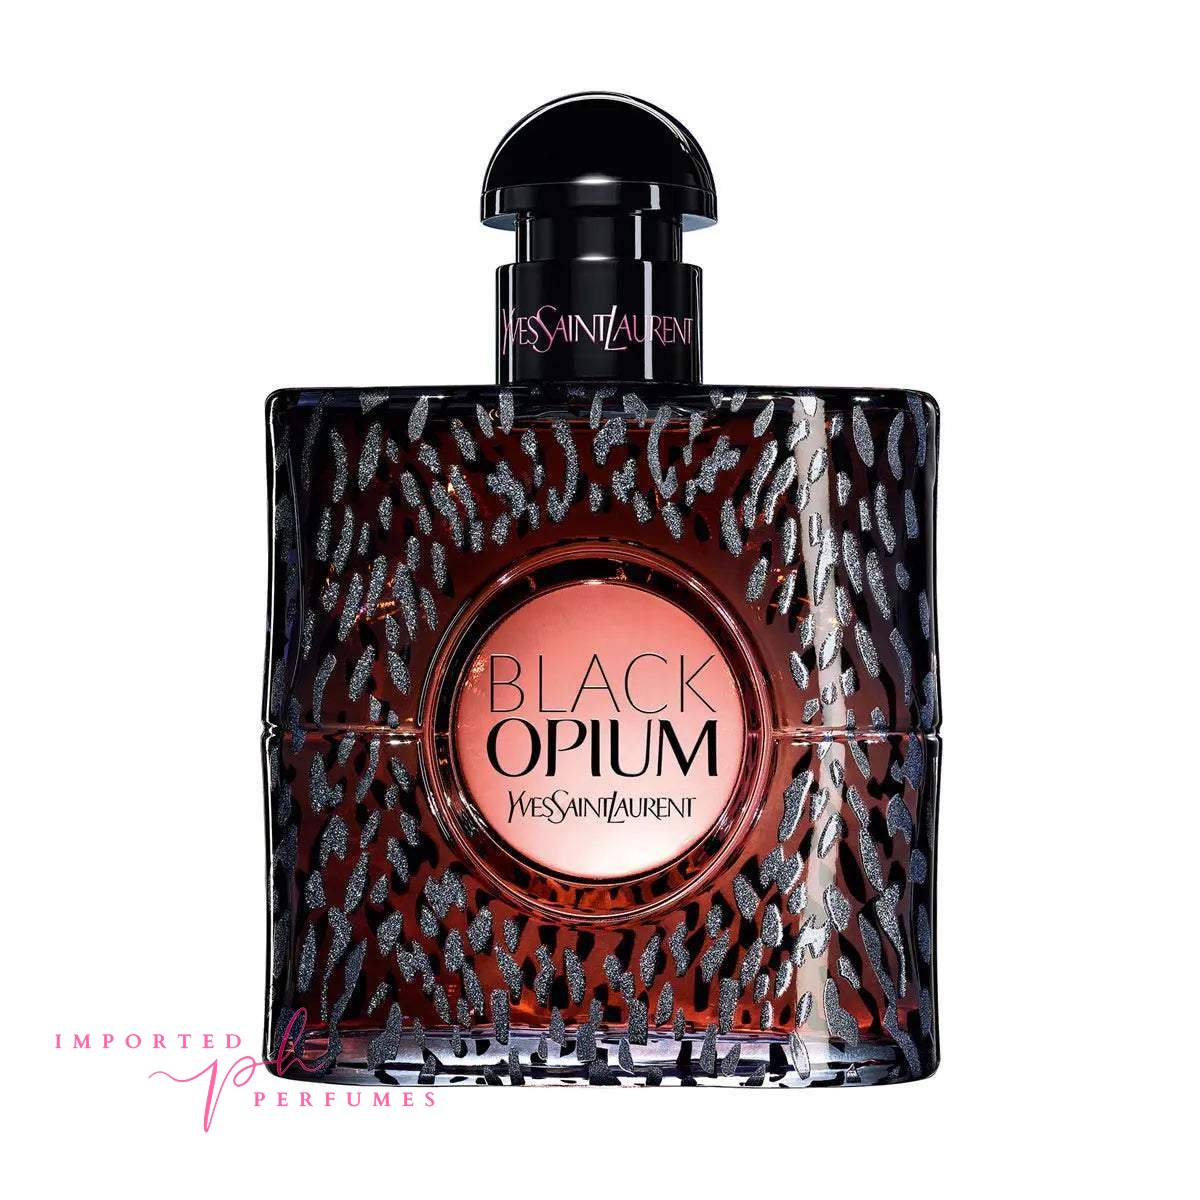 Yves Saint Laurent Black Opium Wild Edition EDP 90ml Women-Imported Perfumes Co-Black Opium Wild,For women,Opium,Opium Wild,wOMEN,Women Perfume,YSL,Yves,Yves Saint Laurent